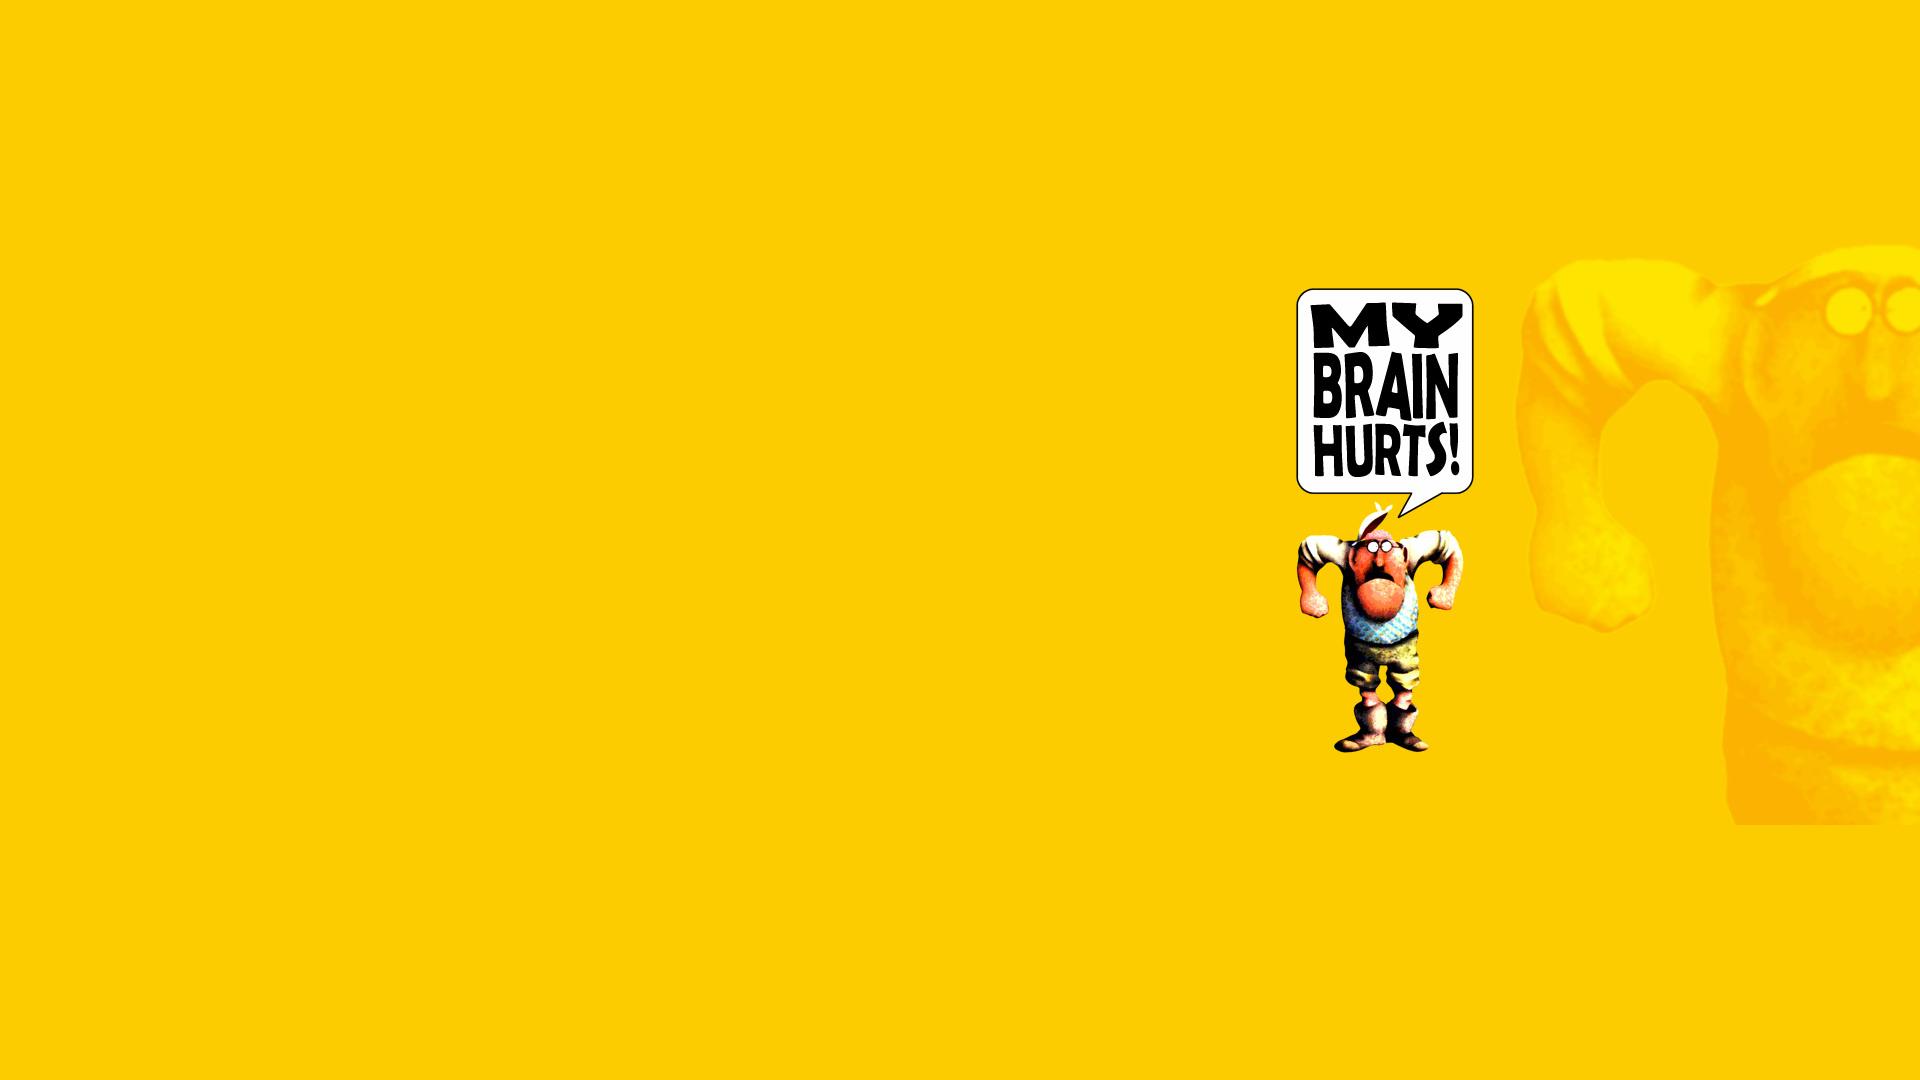 Monty Python Yellow cartoon humor movies text wallpaper 1920x1080 1920x1080